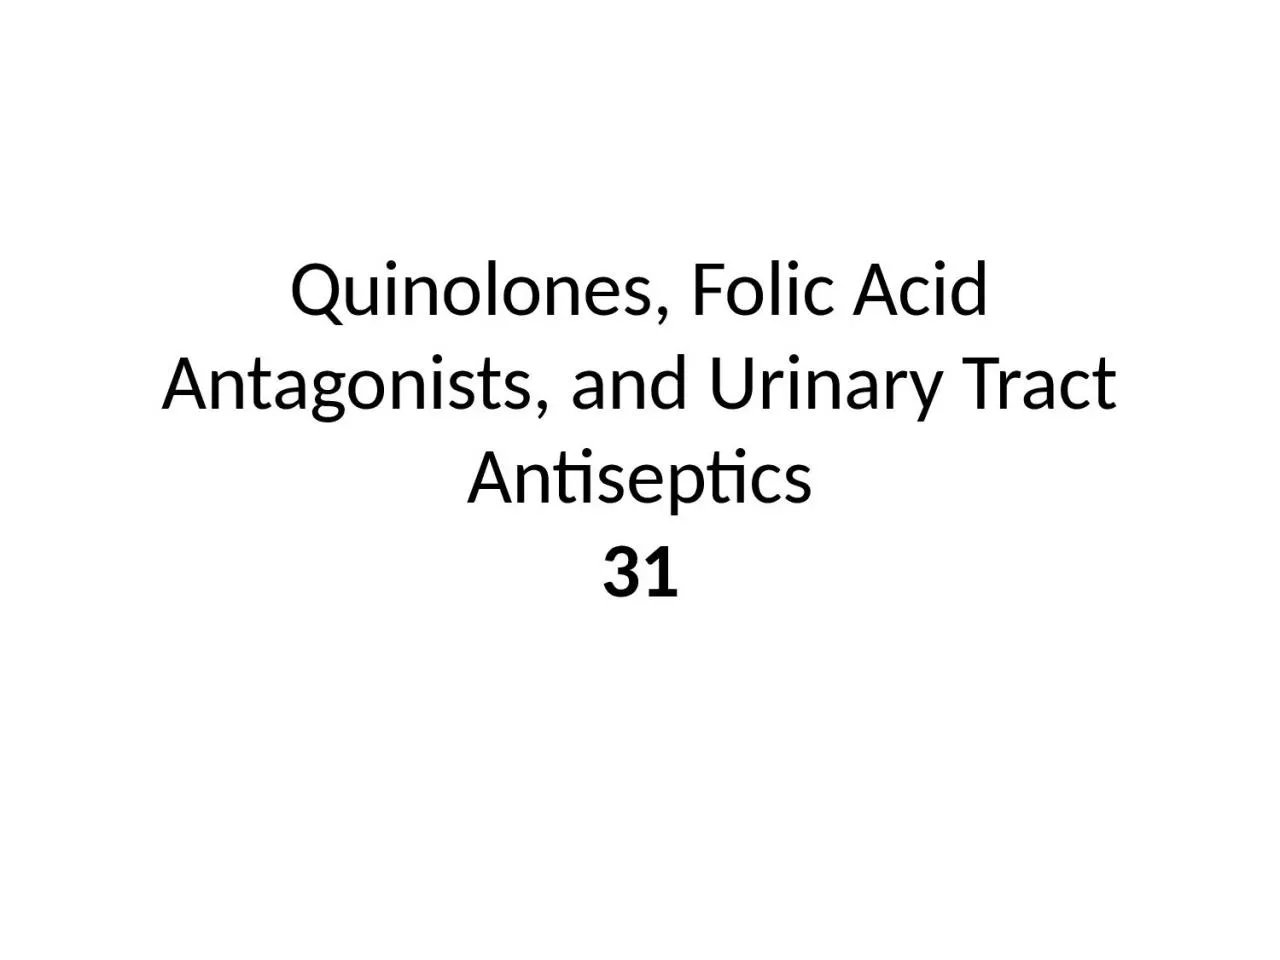 Quinolones, Folic Acid Antagonists, and Urinary Tract